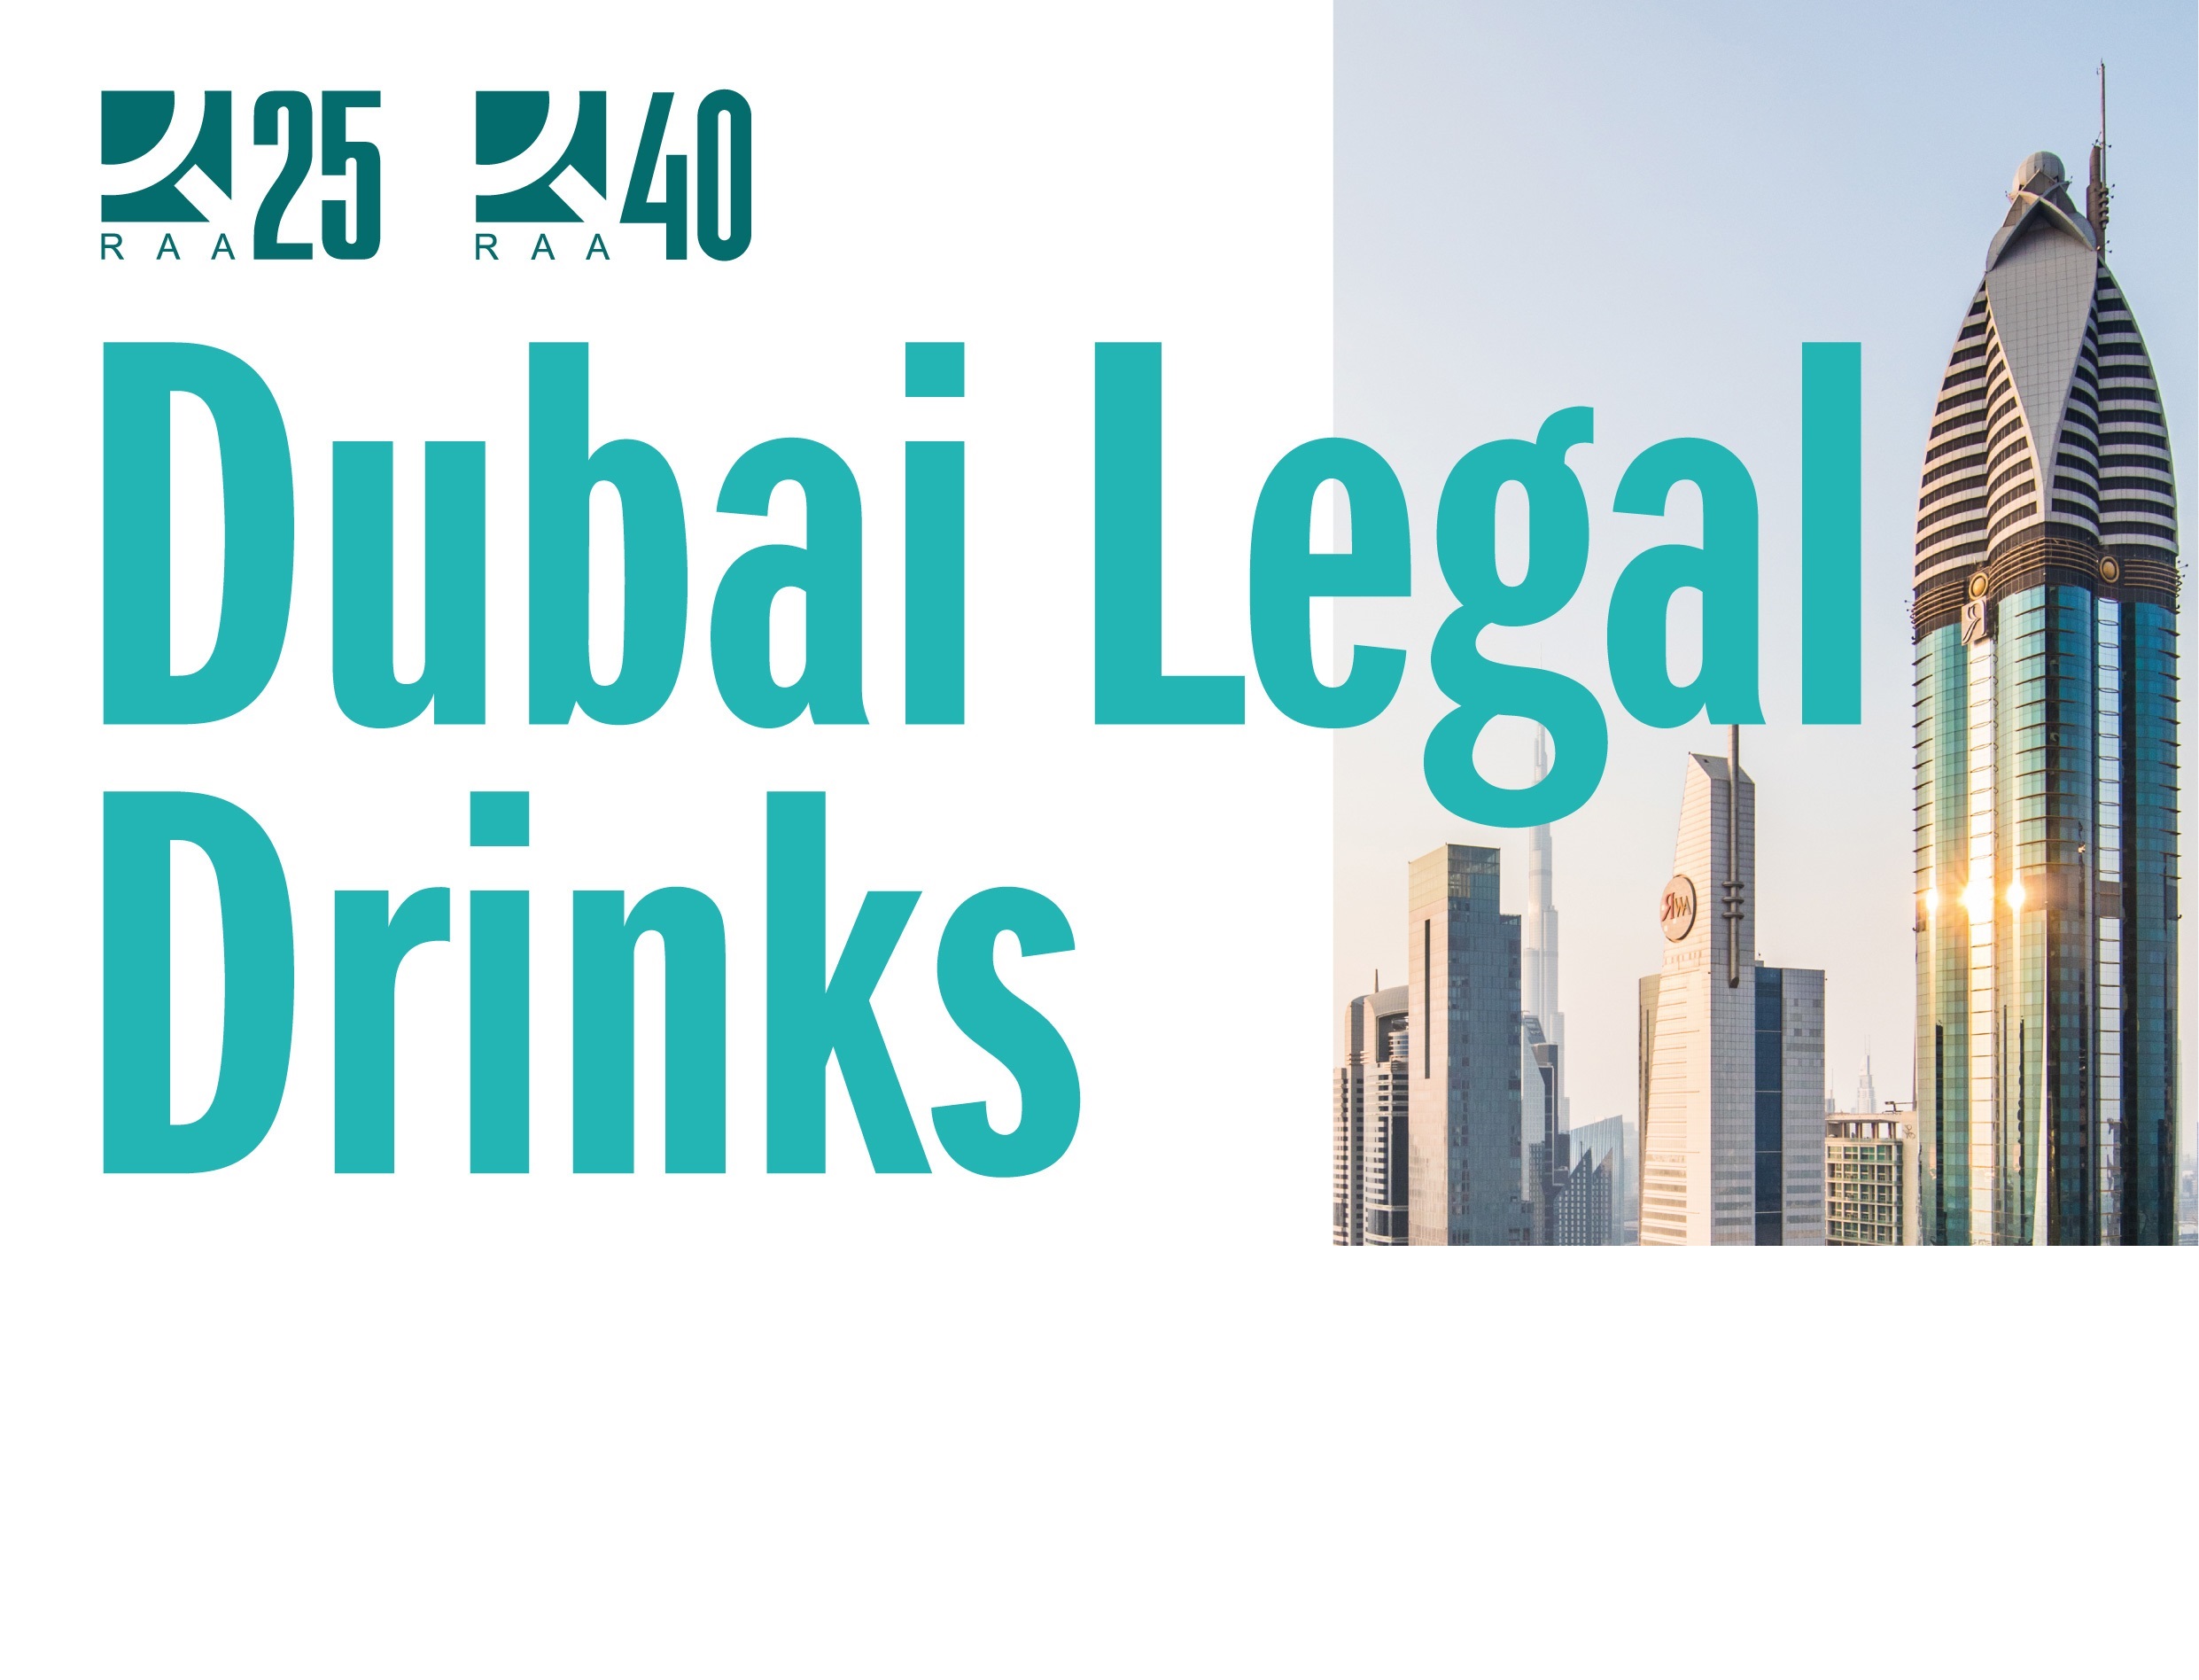 RAA25/40 Dubai Legal Drinks: 15 ноября, бар в DIFC